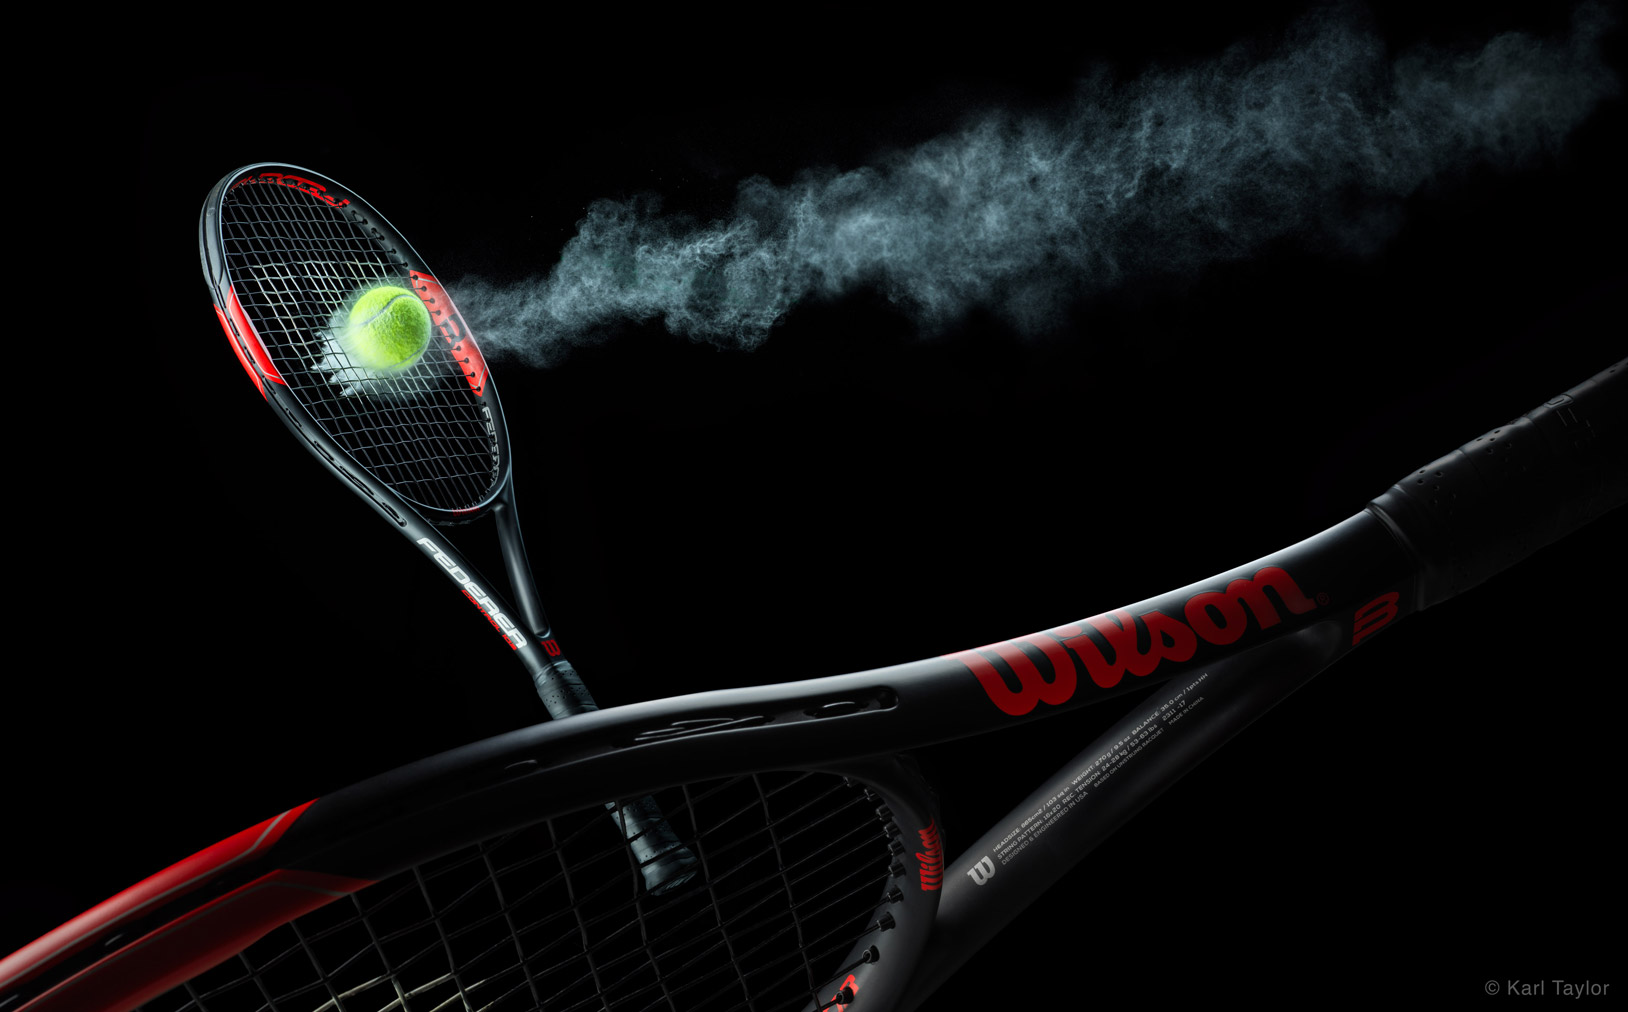 Wilson tennis racket with tennis ball on black background